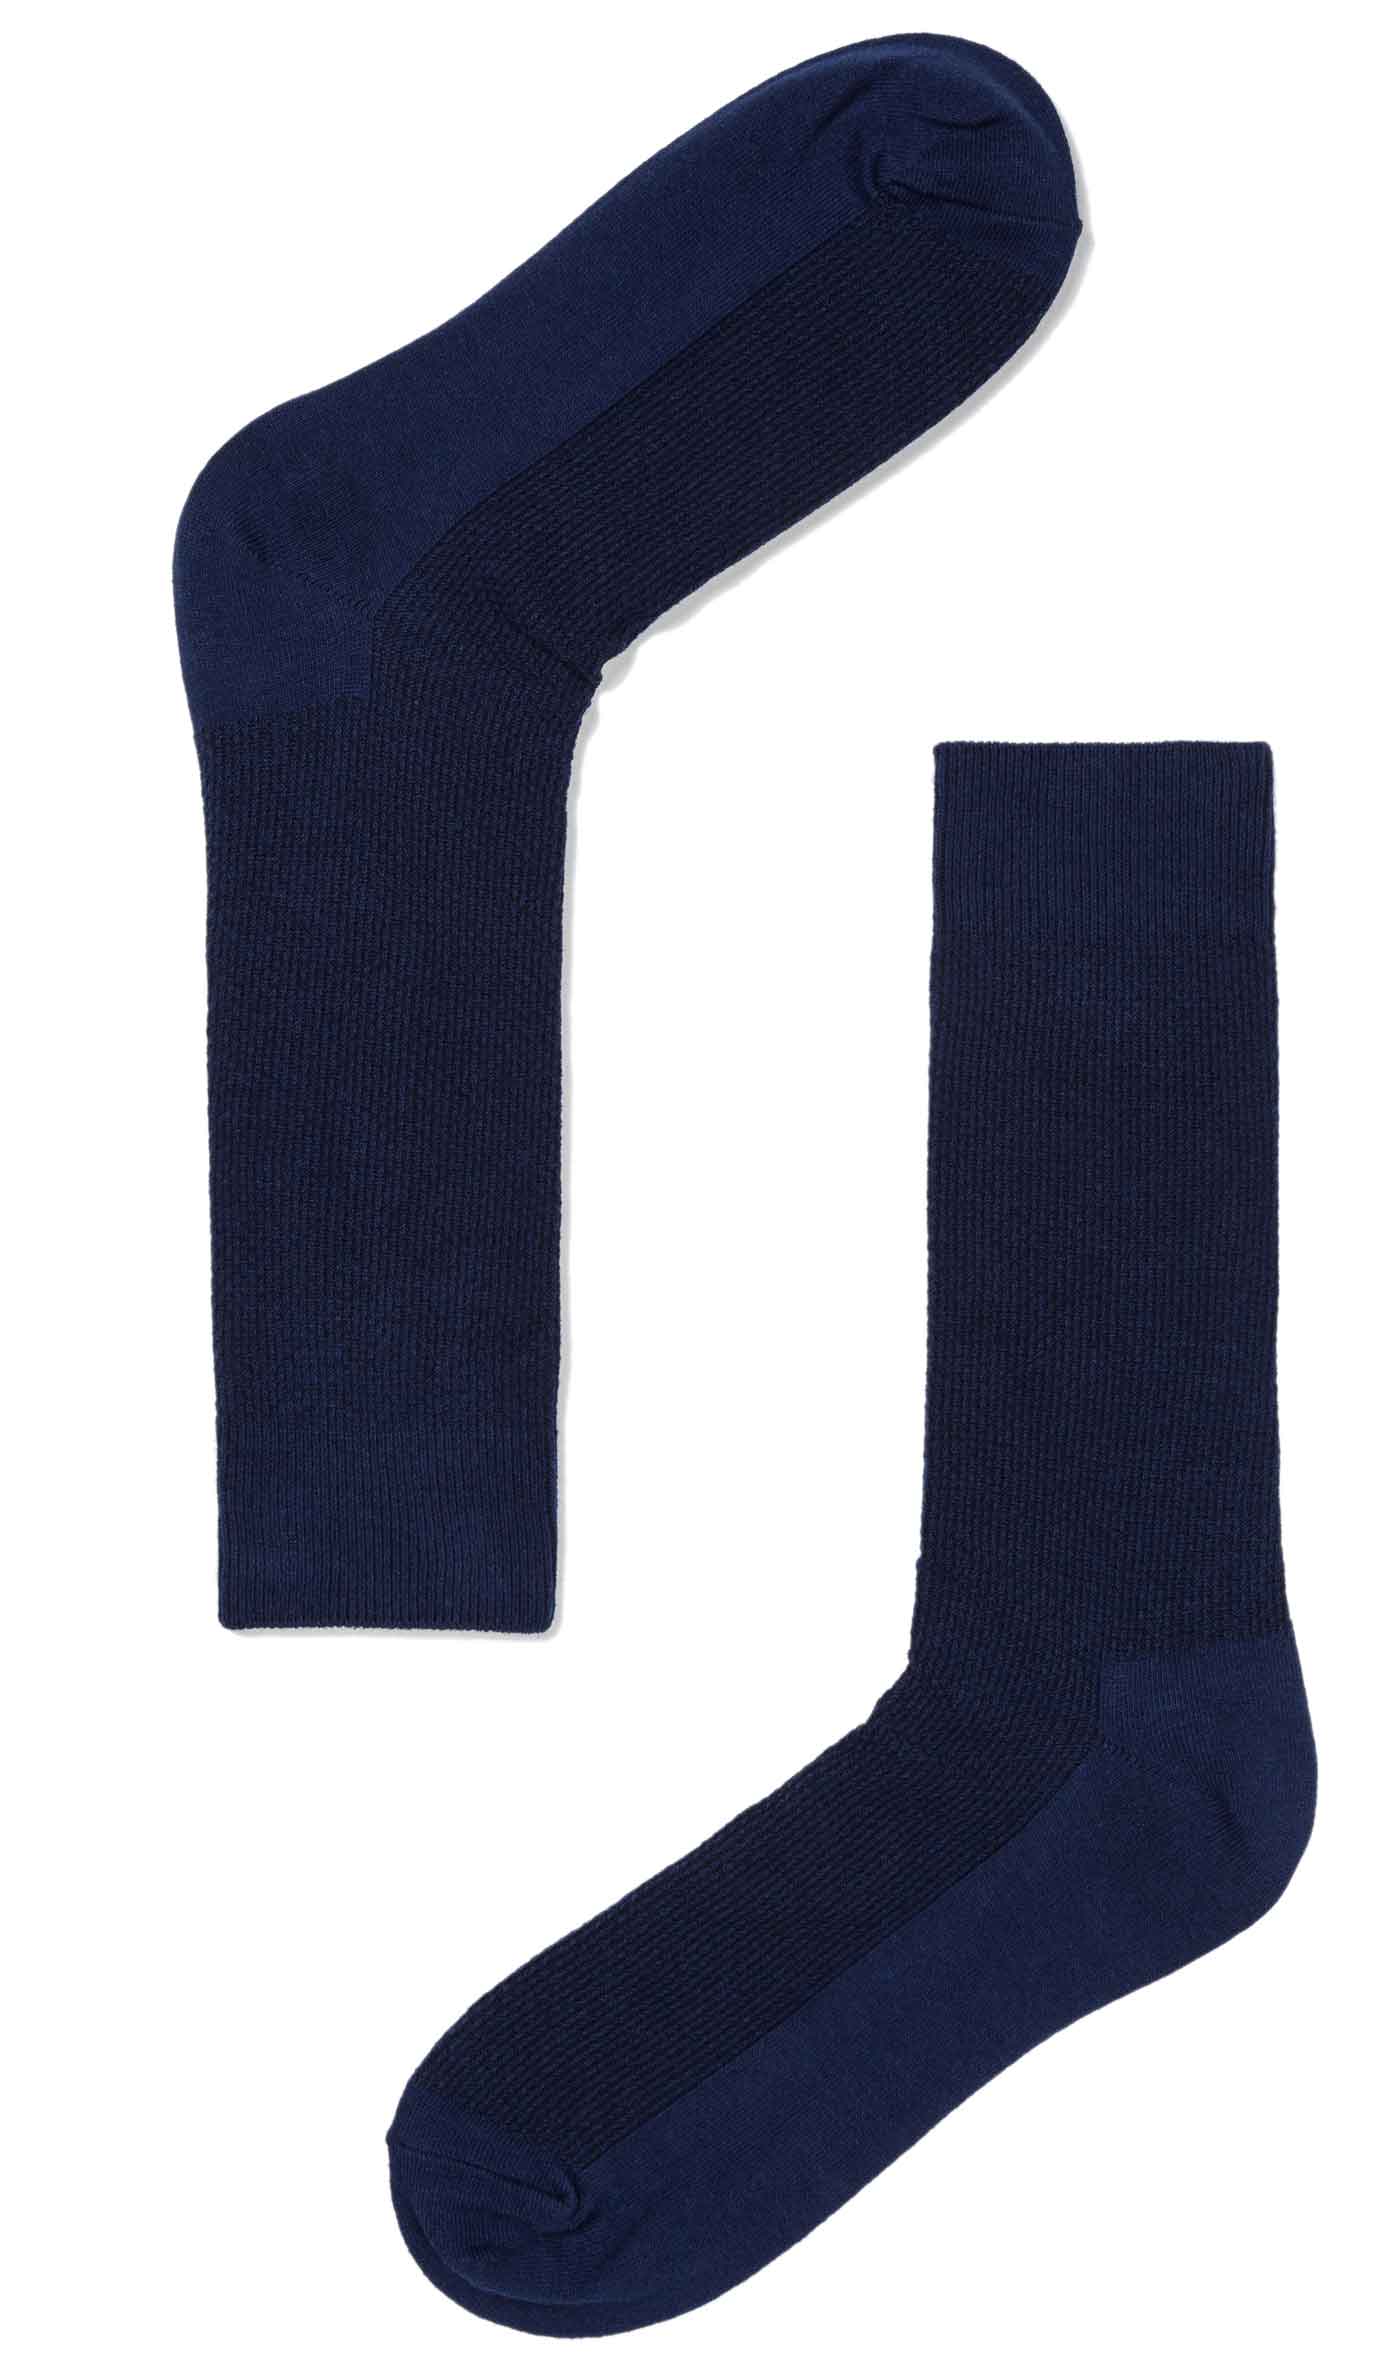 Navy Blue Textured Cotton-Blend Socks